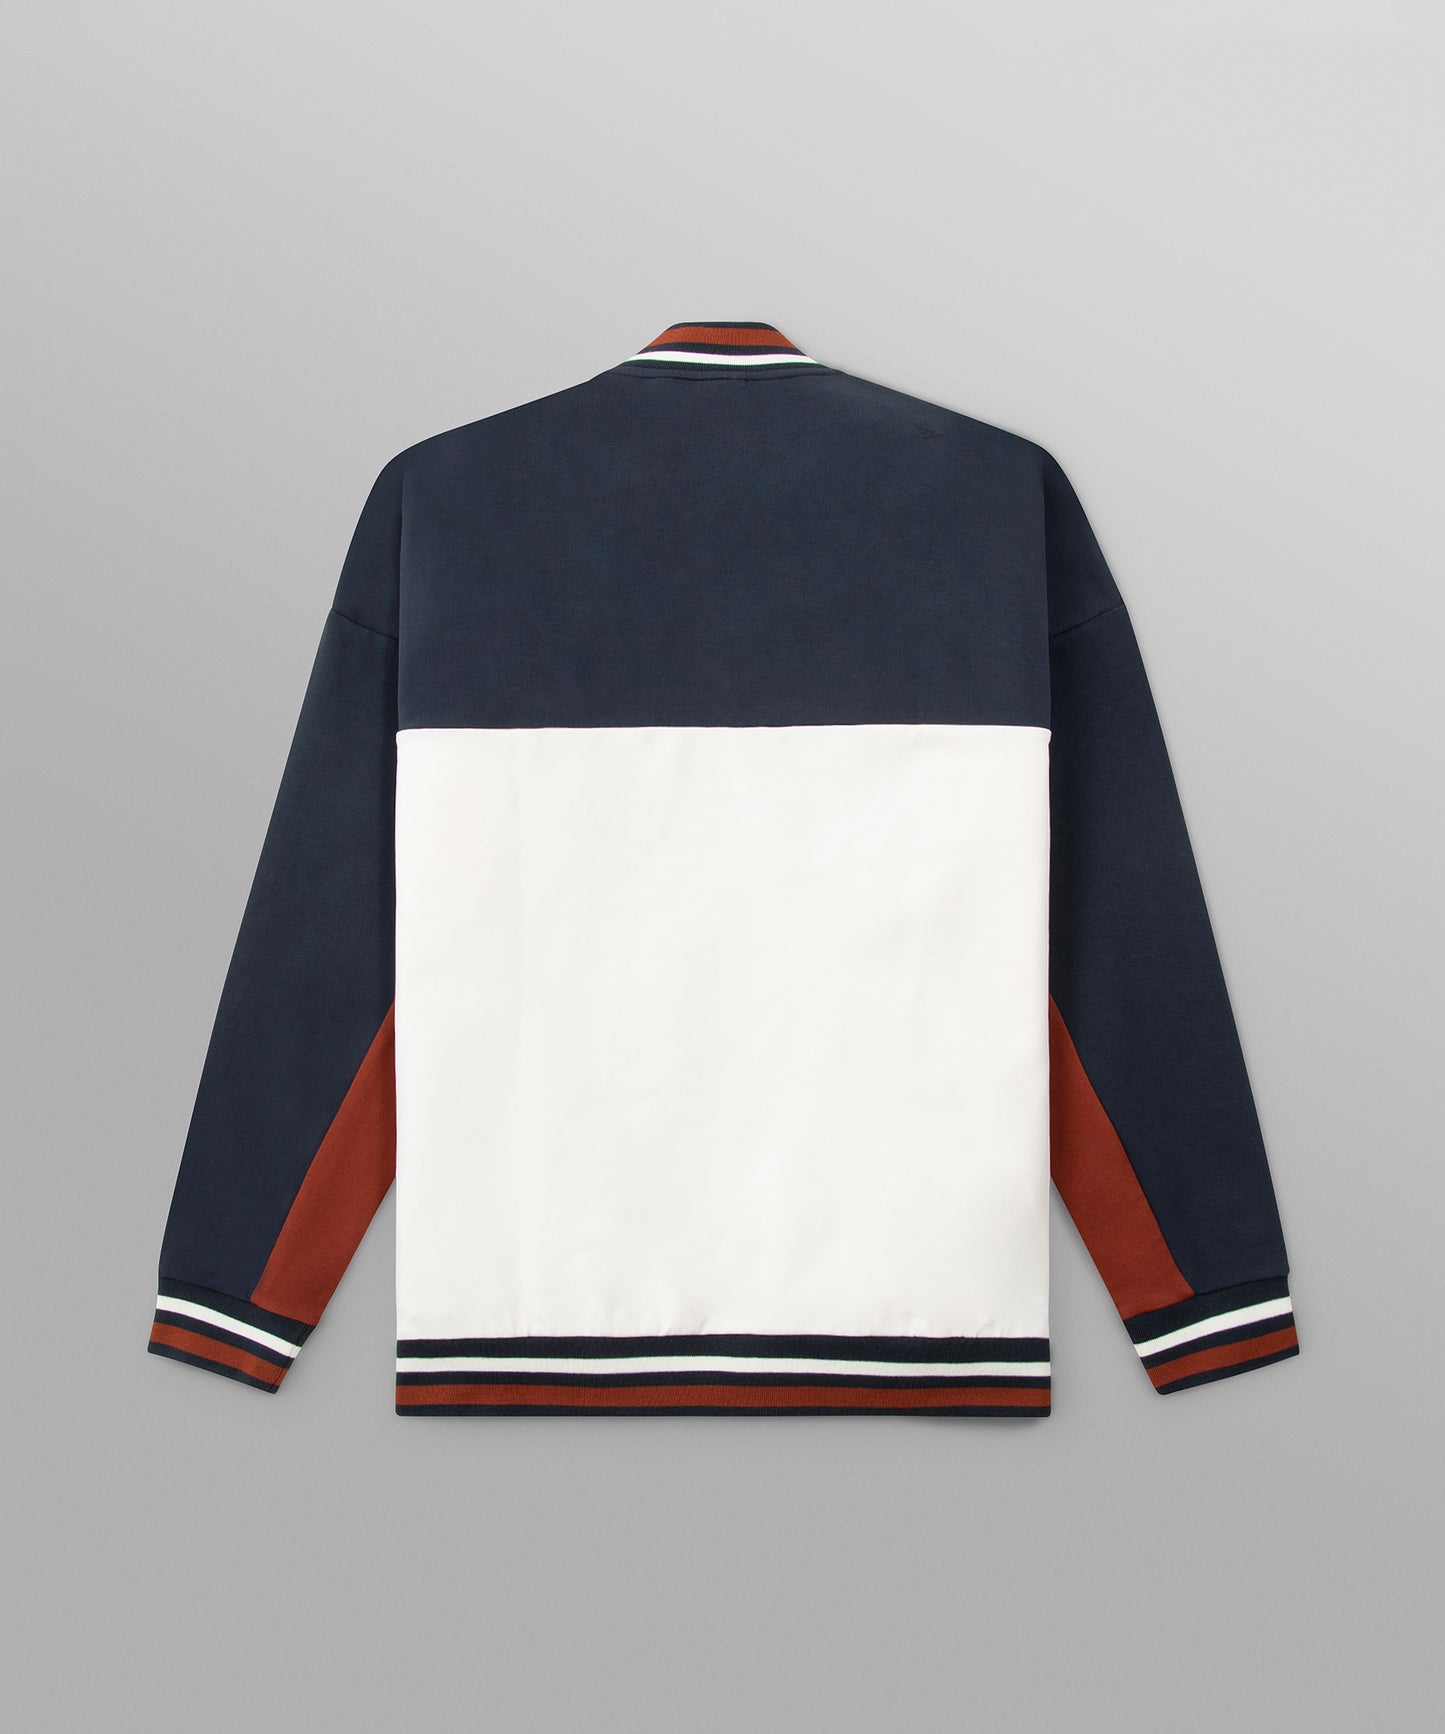 PPL 540 Pullover Sweatshirt